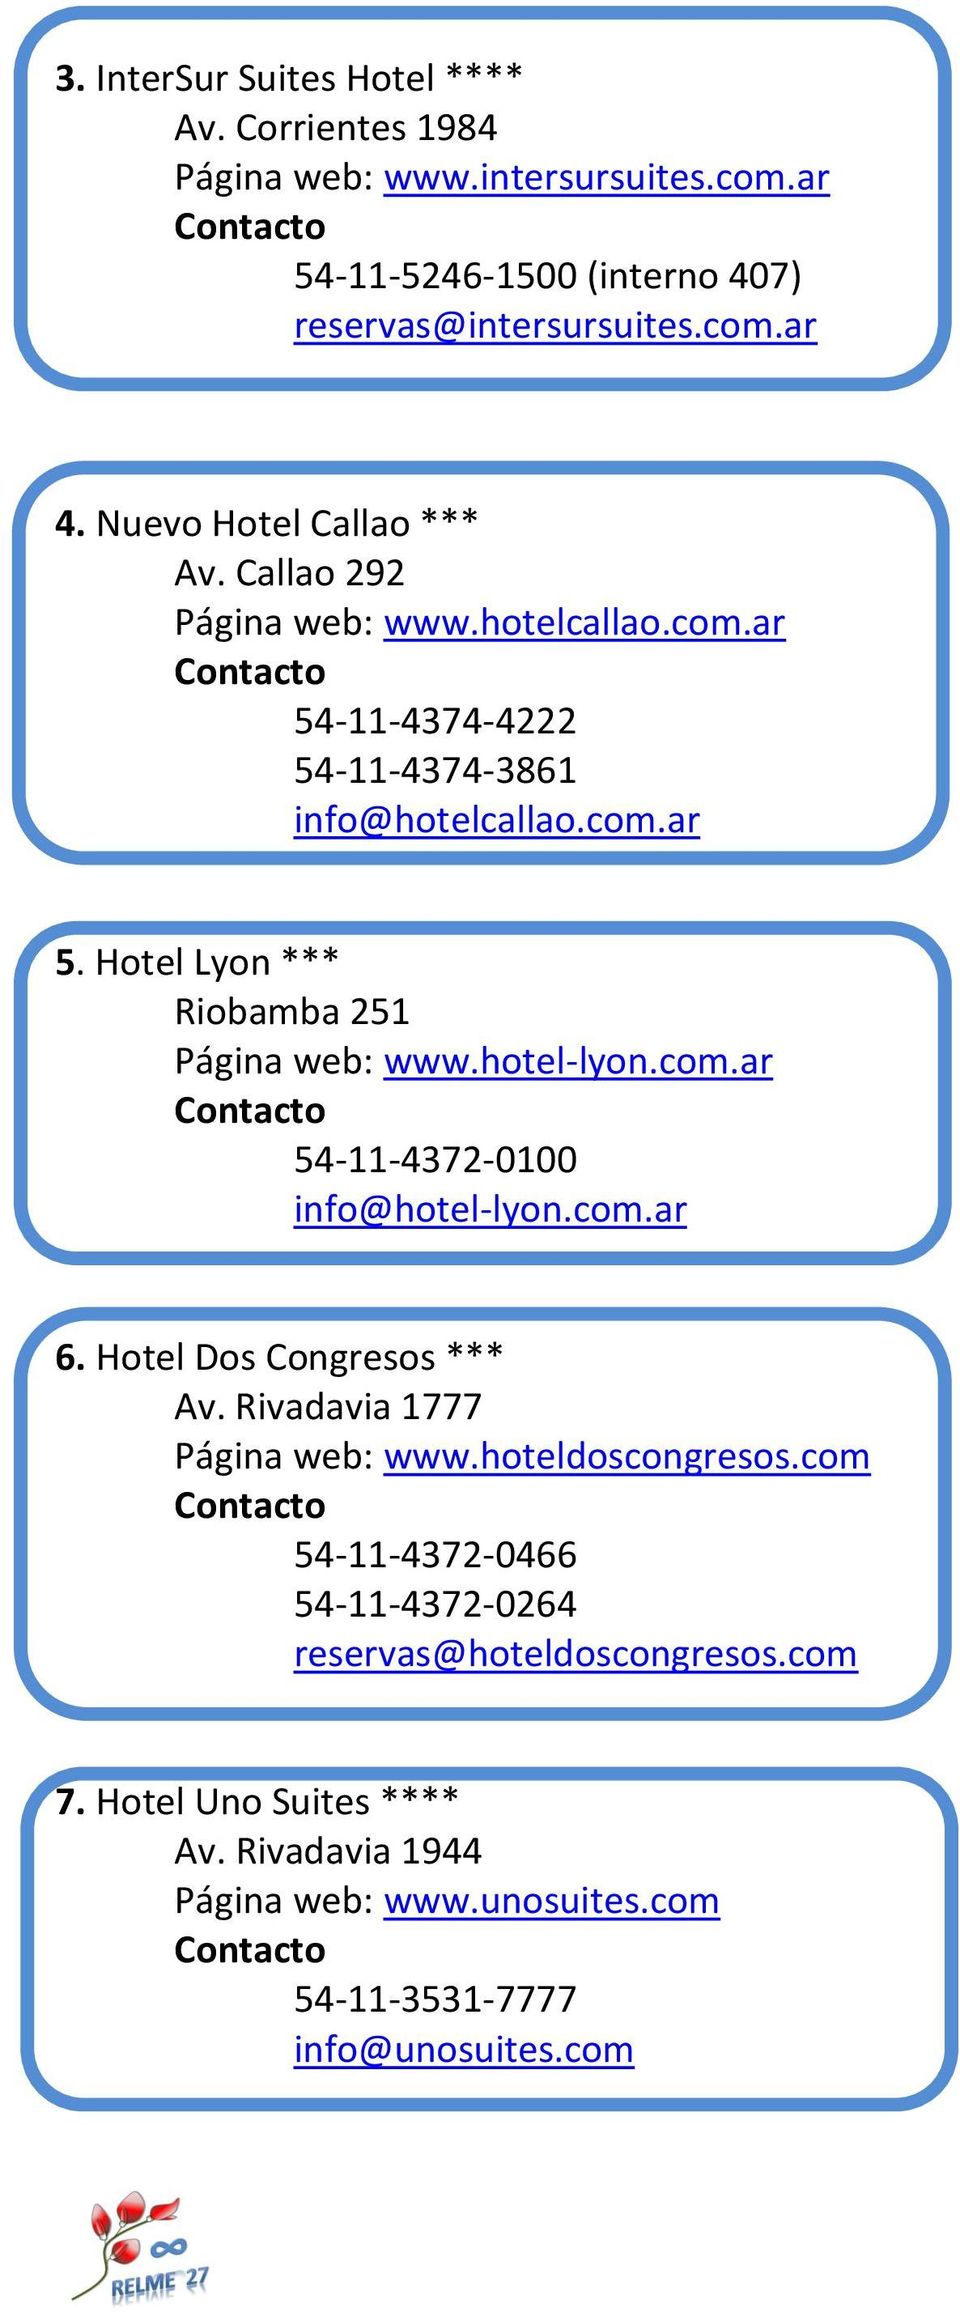 hotel-lyon.com.ar 54-11-4372-0100 info@hotel-lyon.com.ar 6. Hotel Dos Congresos *** Av. Rivadavia 1777 Página web: www.hoteldoscongresos.